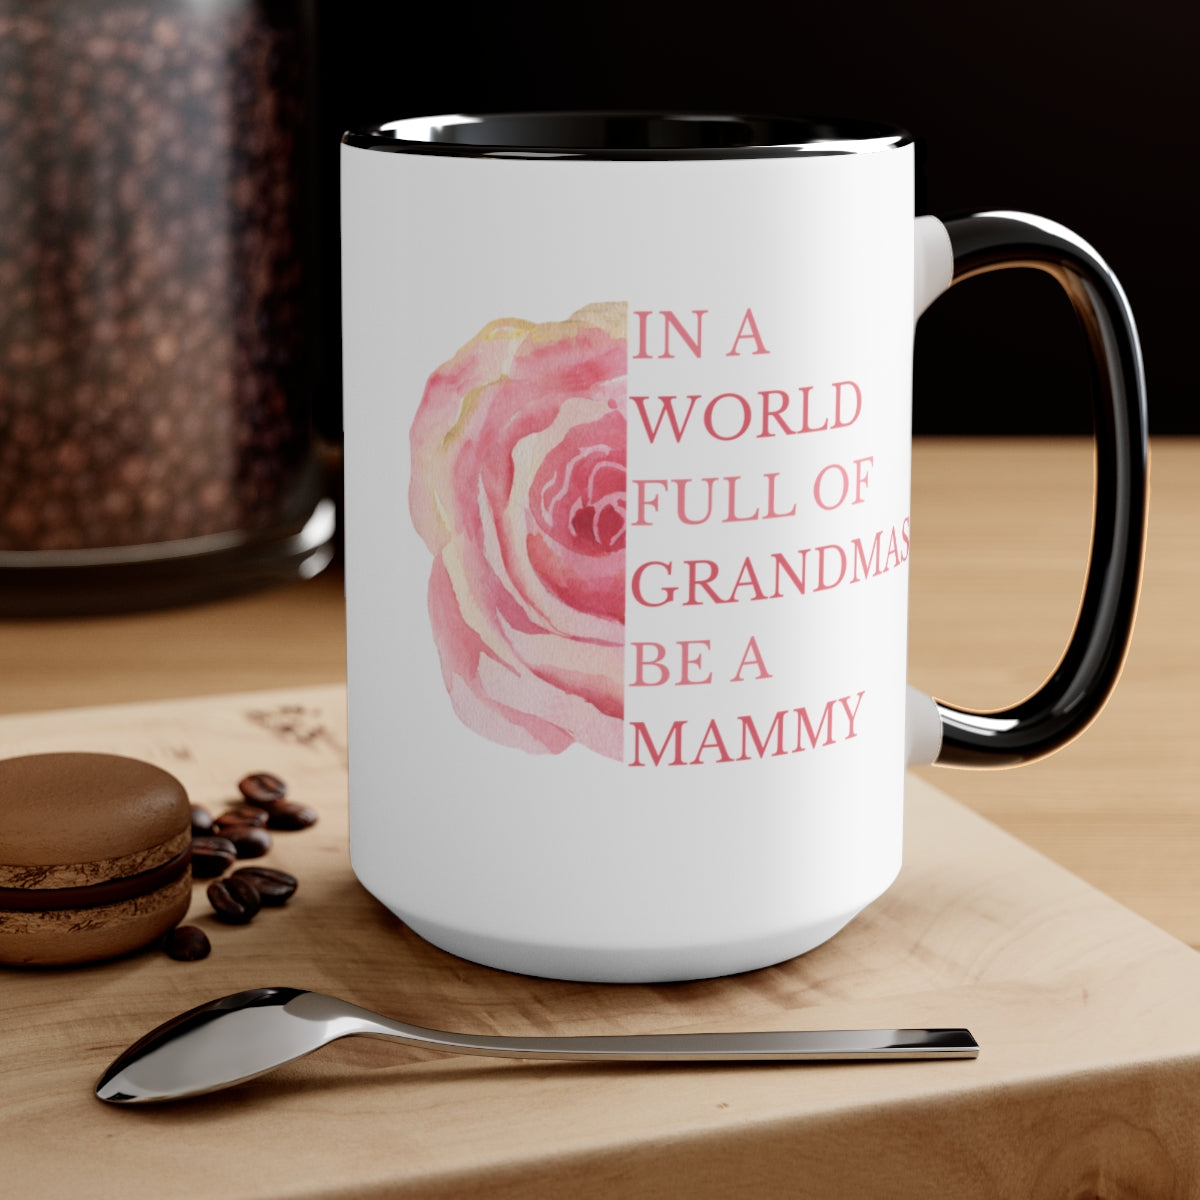 In a World full of Grandmas, Be a Mammy Two-Tone 15oz Mug